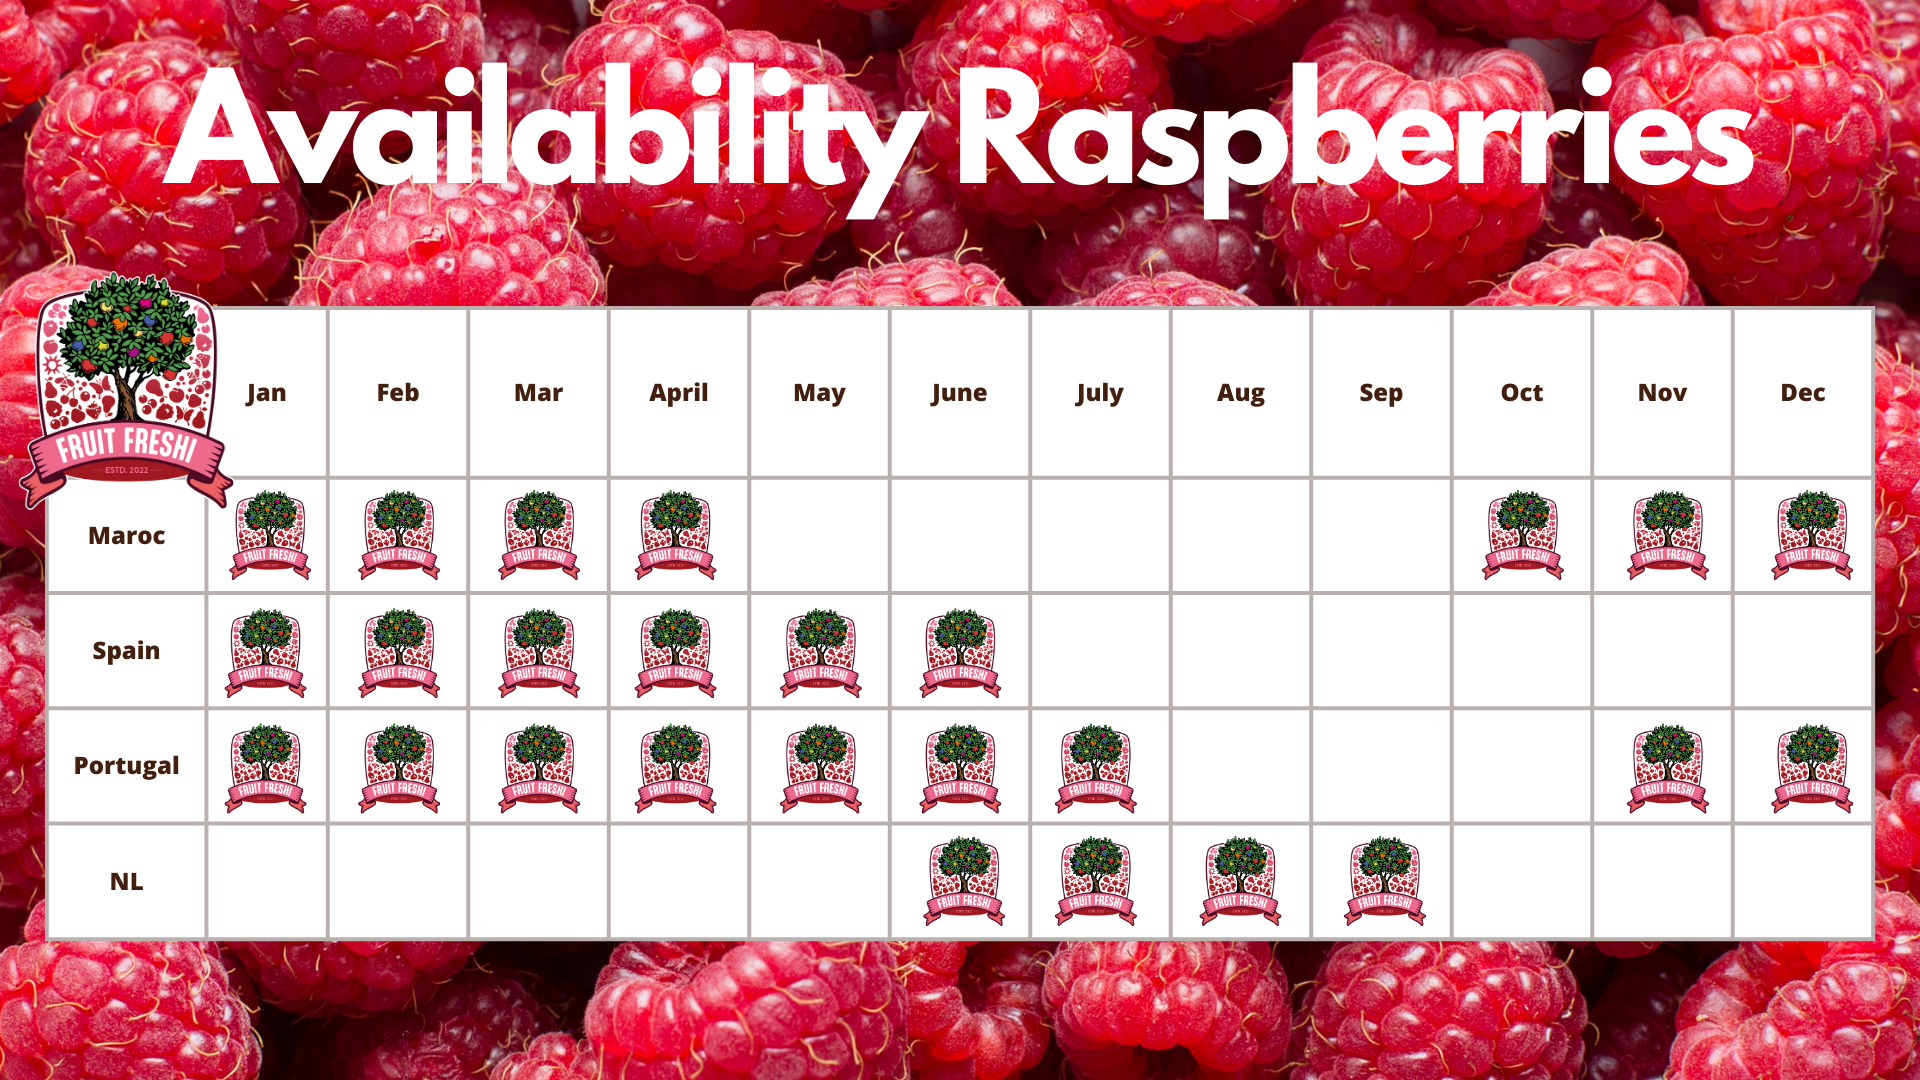 Availability Raspberries Fruit Freshi